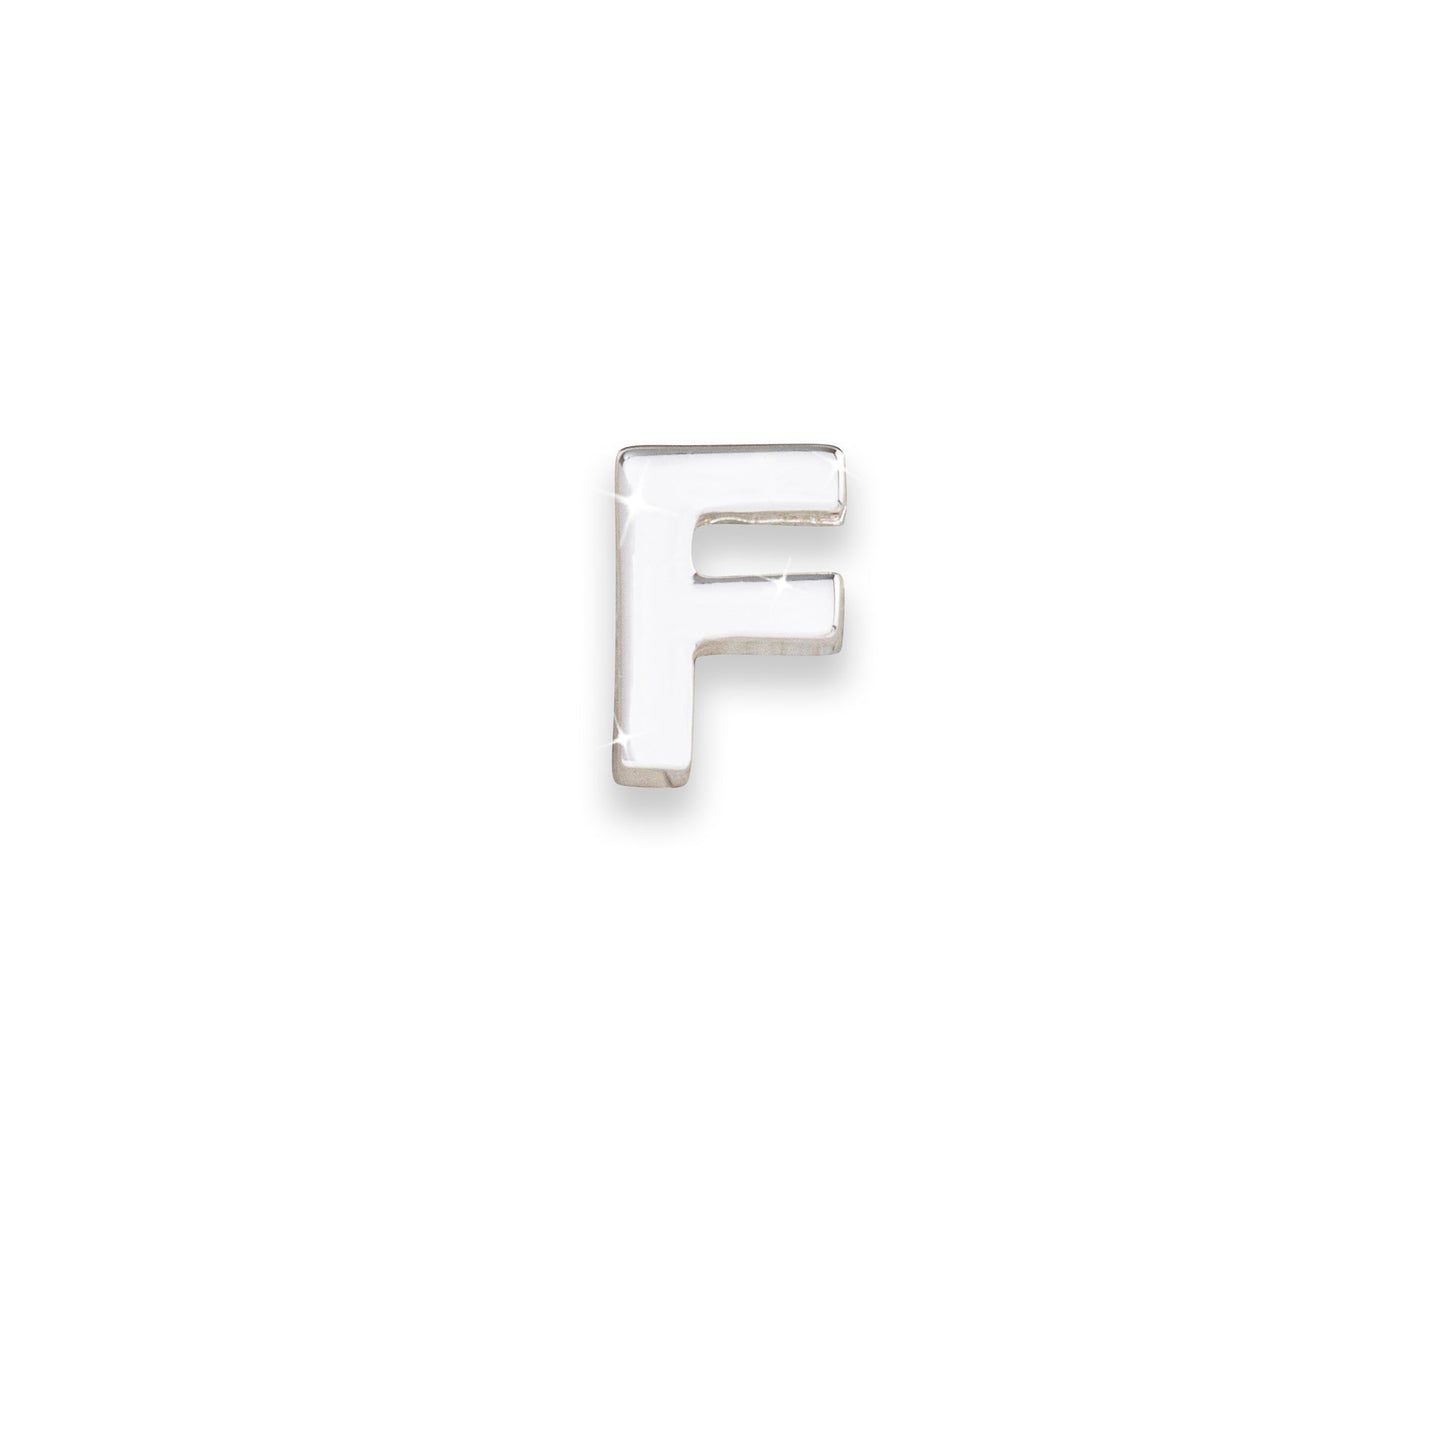 Silver letter F monogram charm for necklaces & bracelets